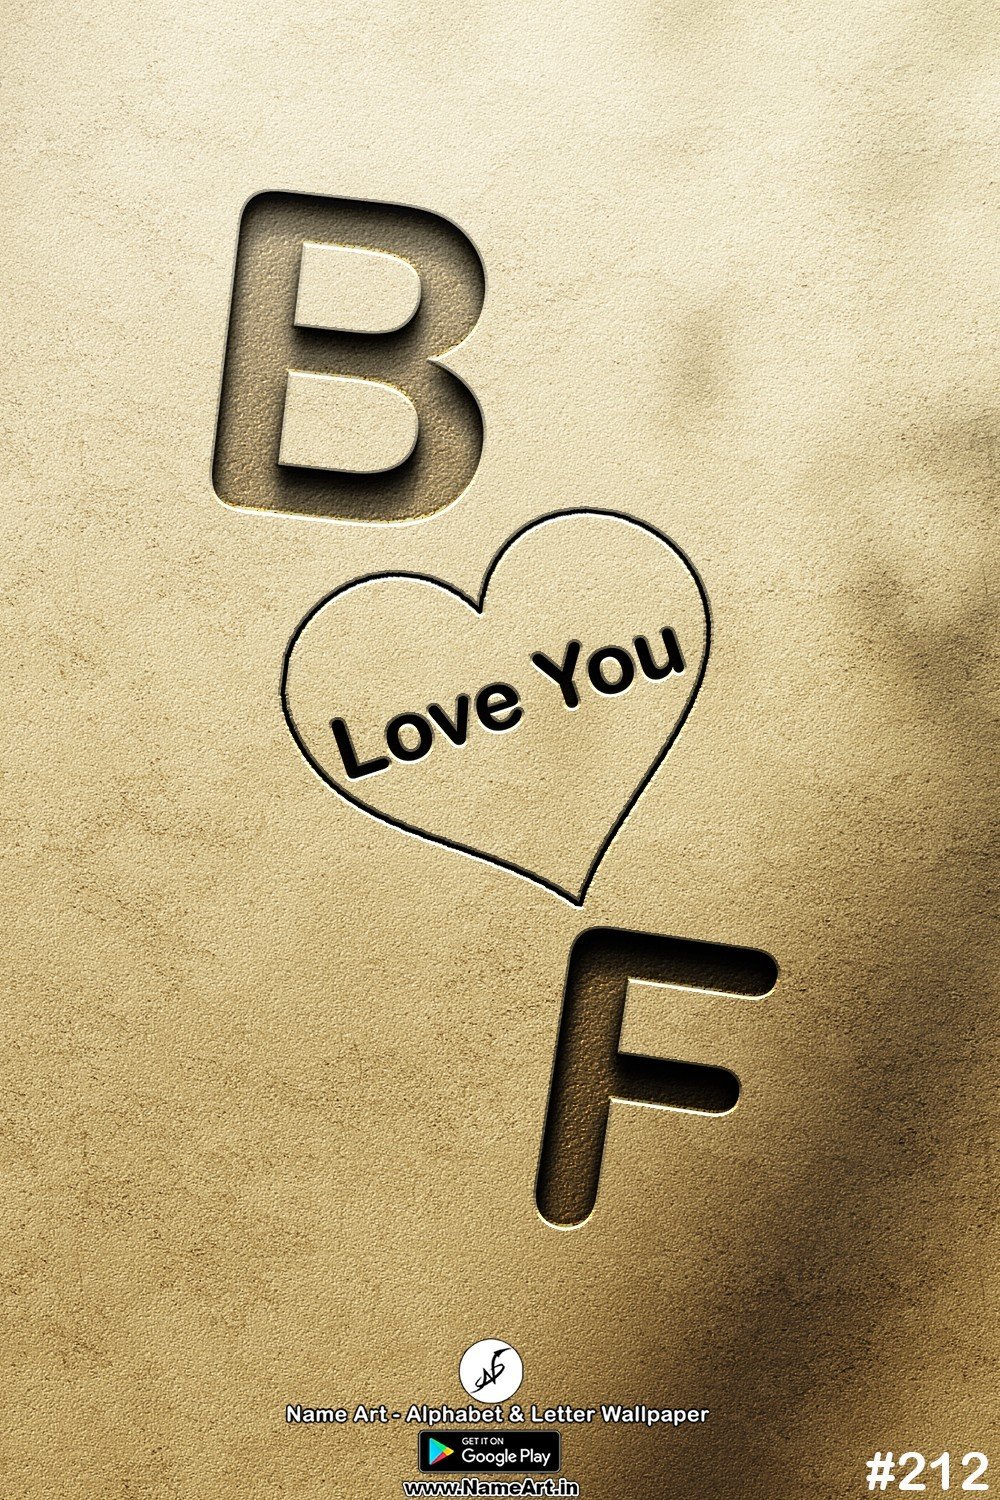 BF | Whatsapp Status DP BF | BF Love Status Cute Couples Whatsapp Status DP !! | New Whatsapp Status DP BF Images |